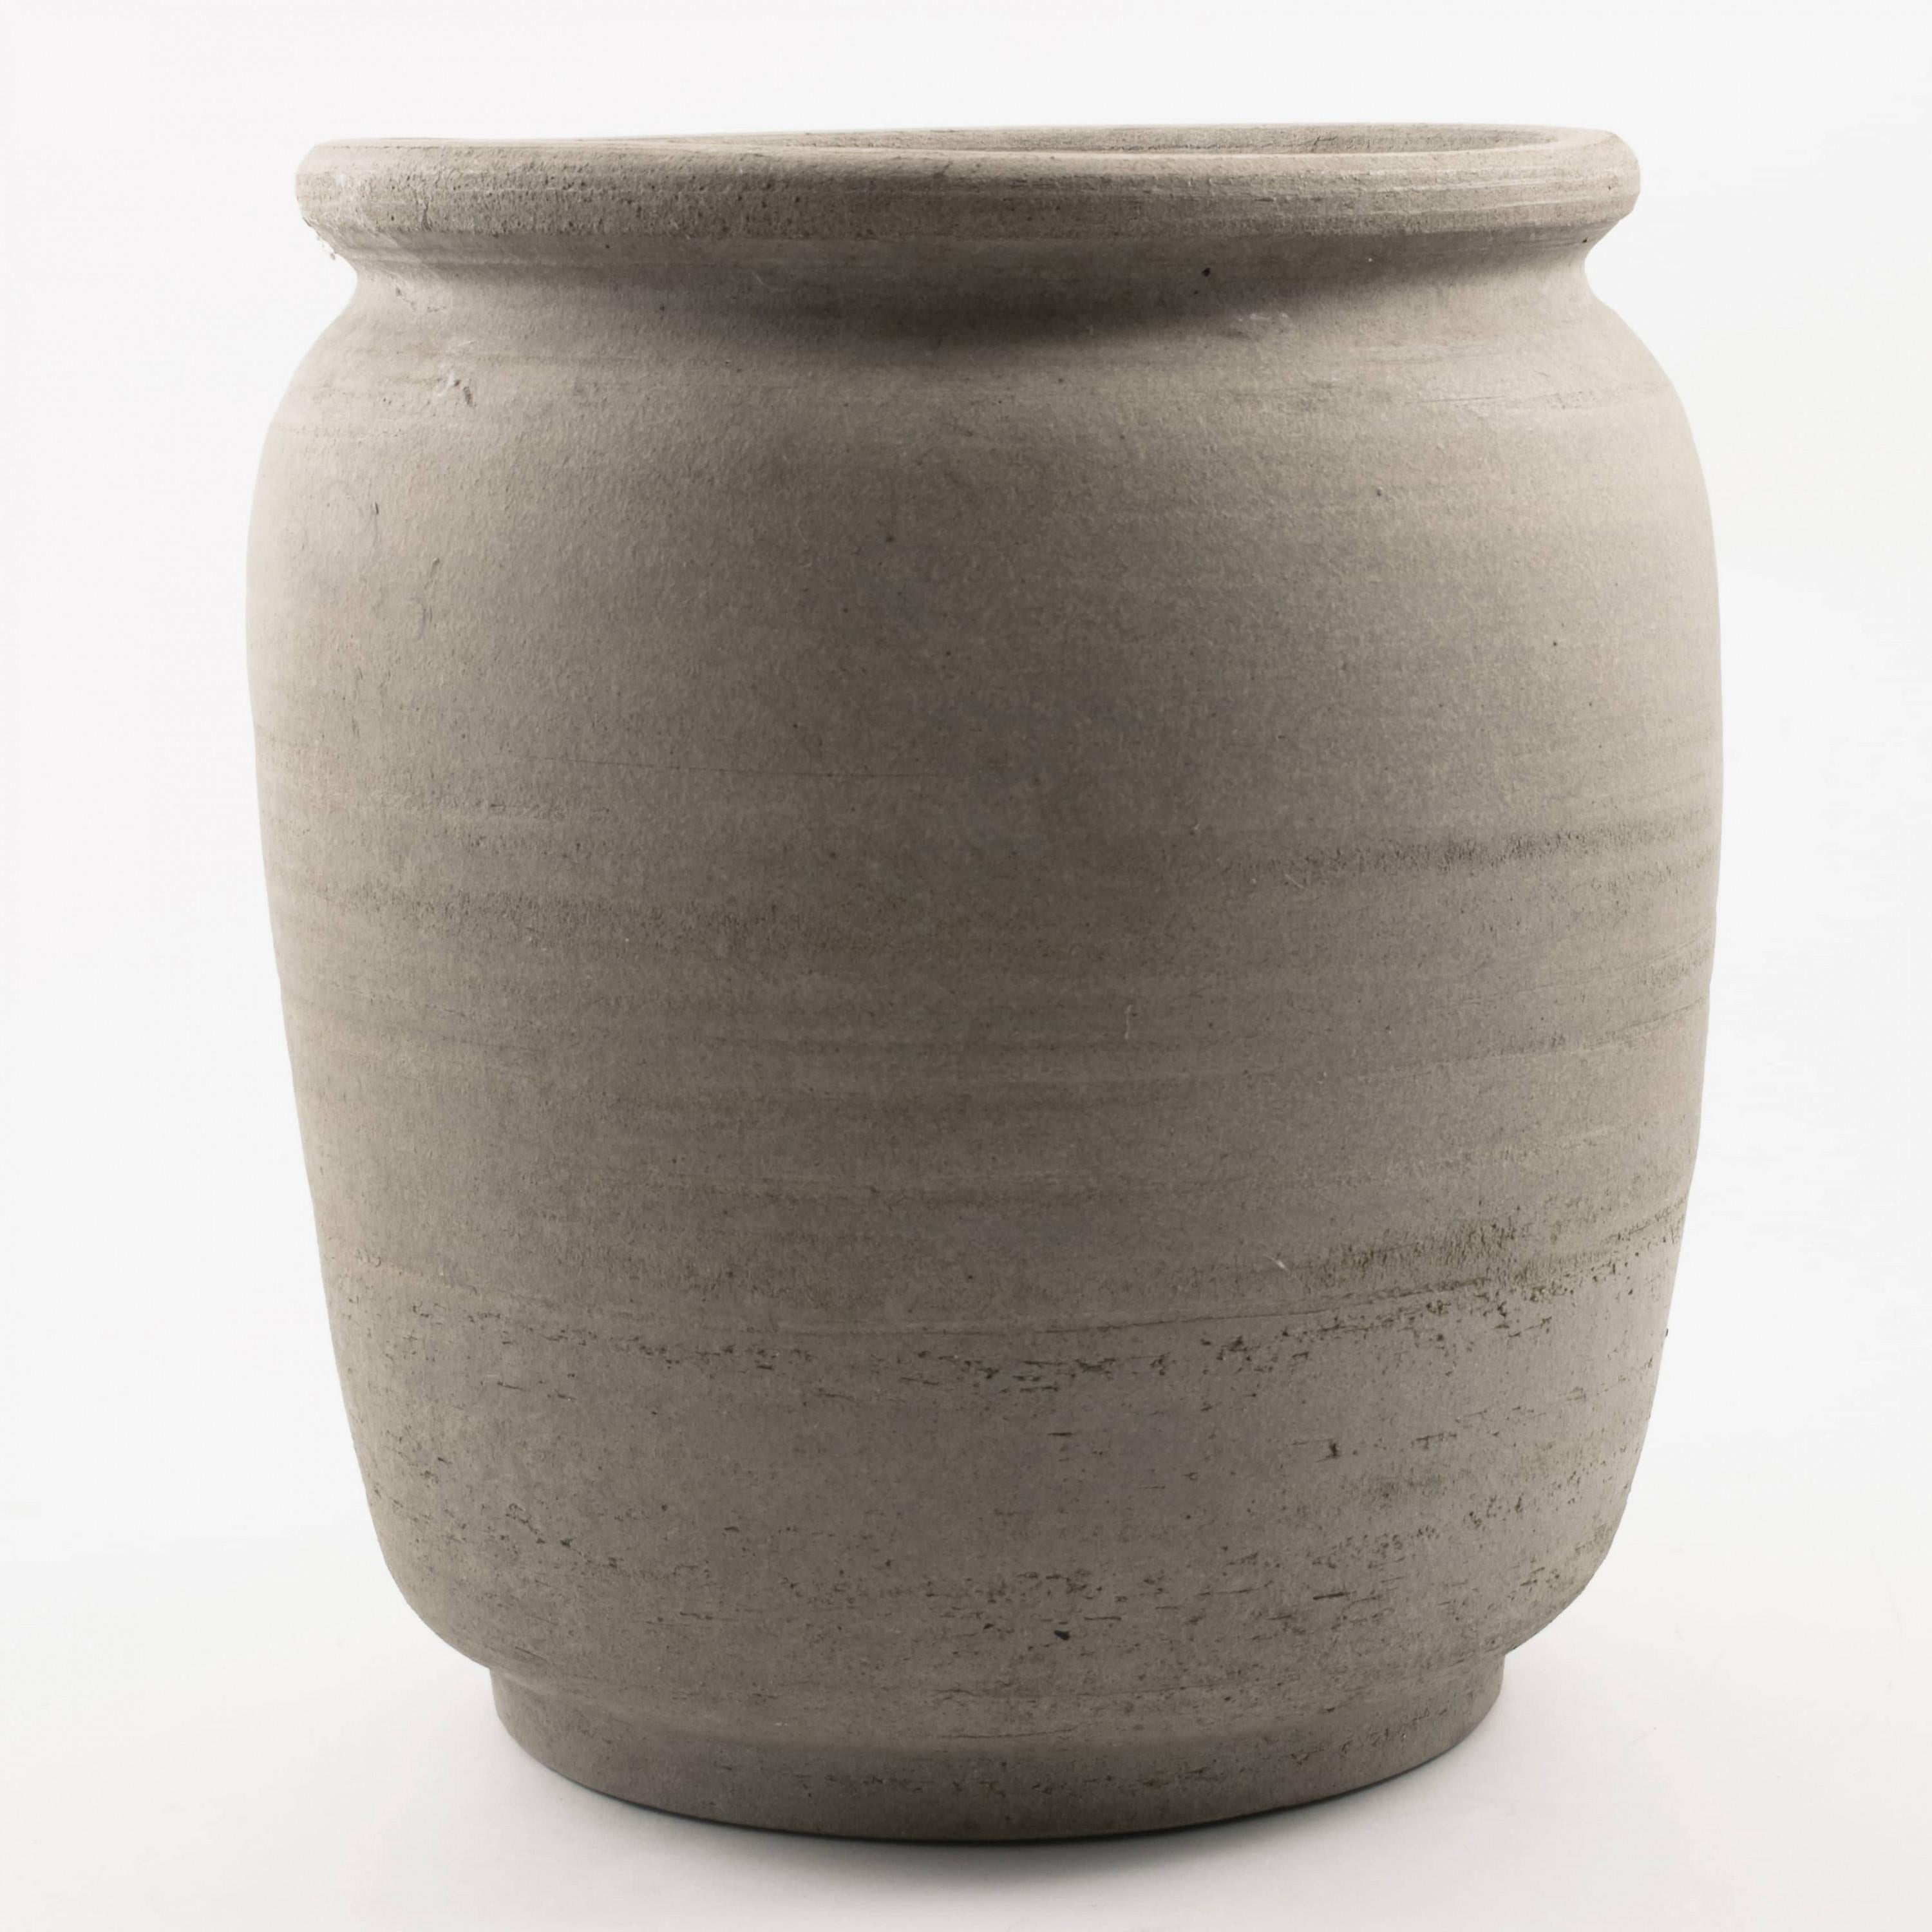 Kähler vase, stoneware.
Design by Nils Kähler approx. 1960.

Signed HAK. Herman A. Kähler.

